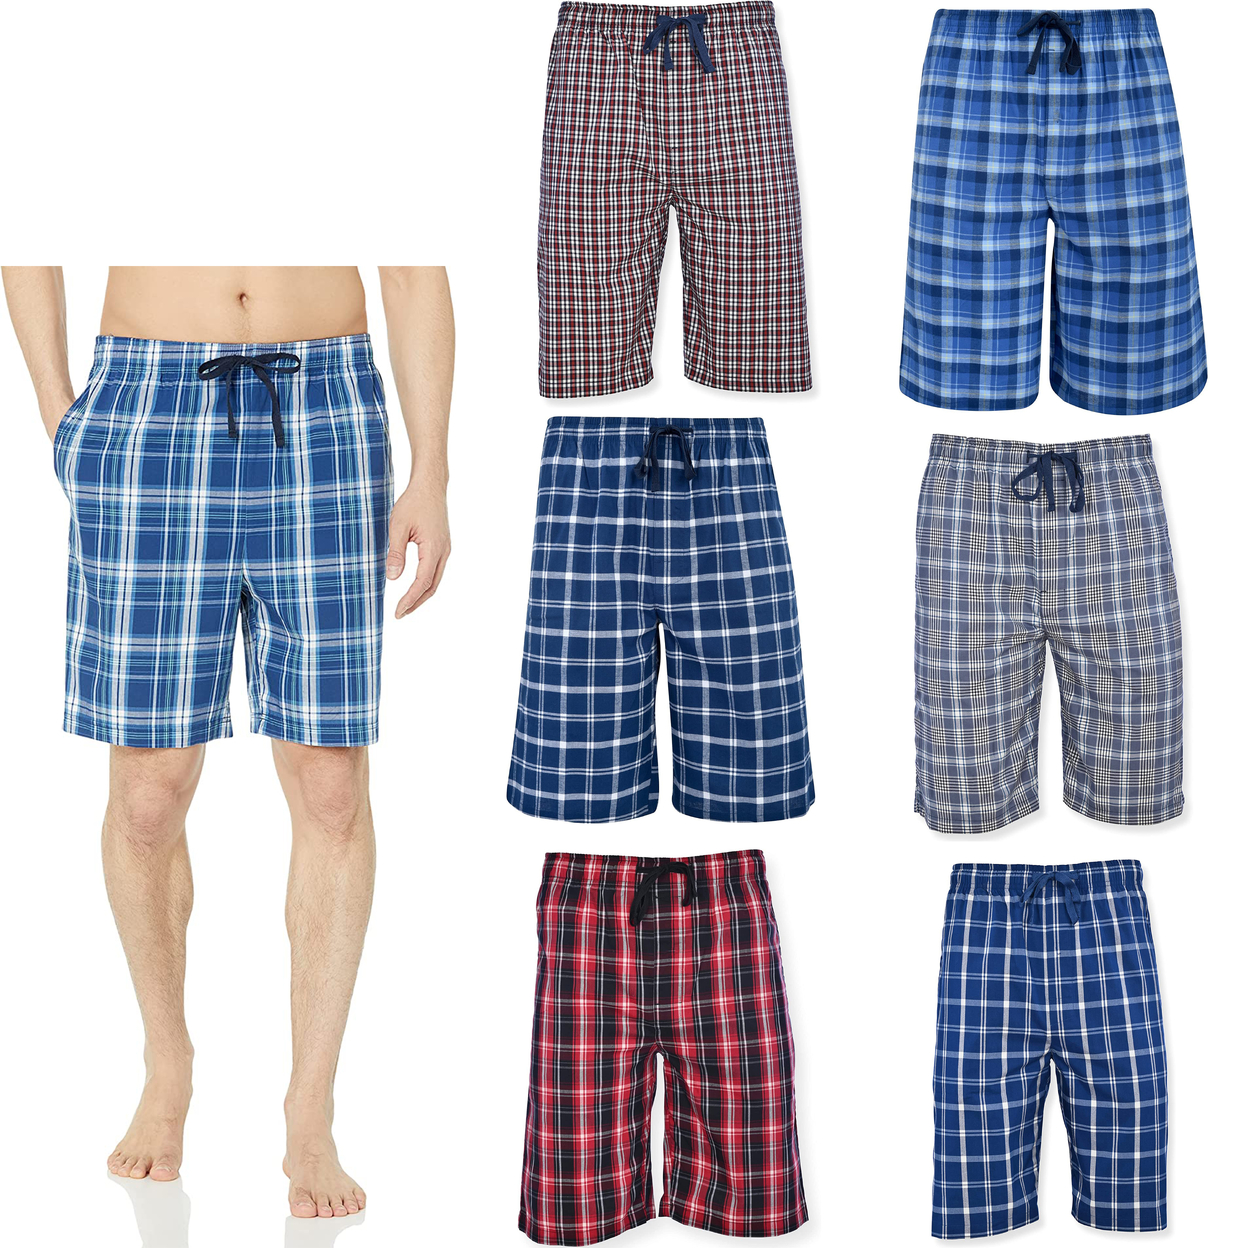 2-Pack: Men's Ultra Soft Plaid Lounge Pajama Sleep Wear Shorts - Black & Tan, Medium